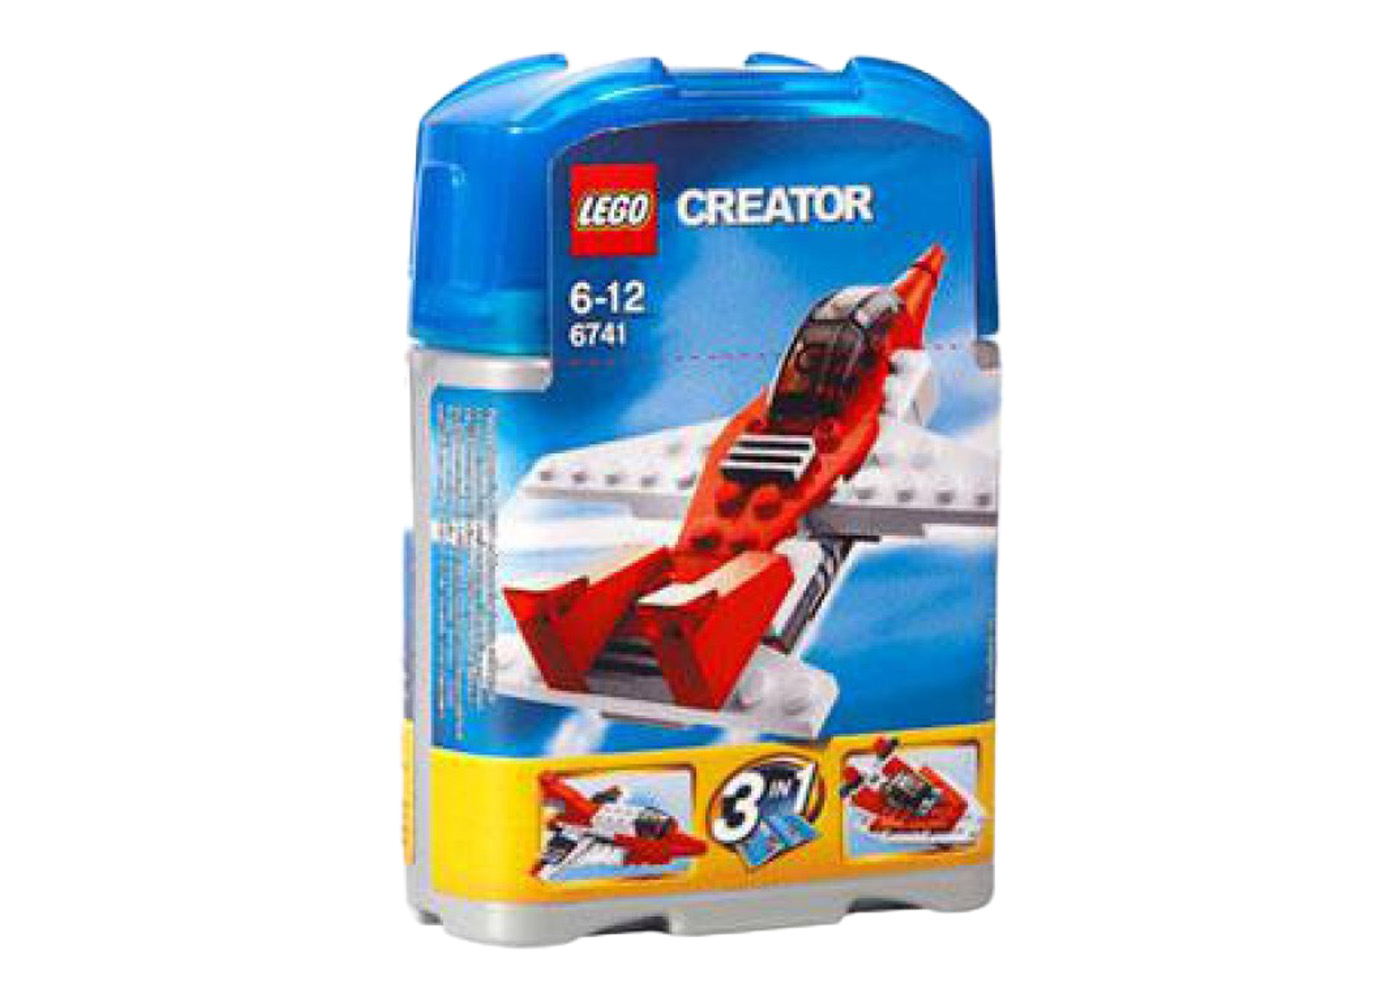 LEGO Creator Mini Jet Set 6741 - US